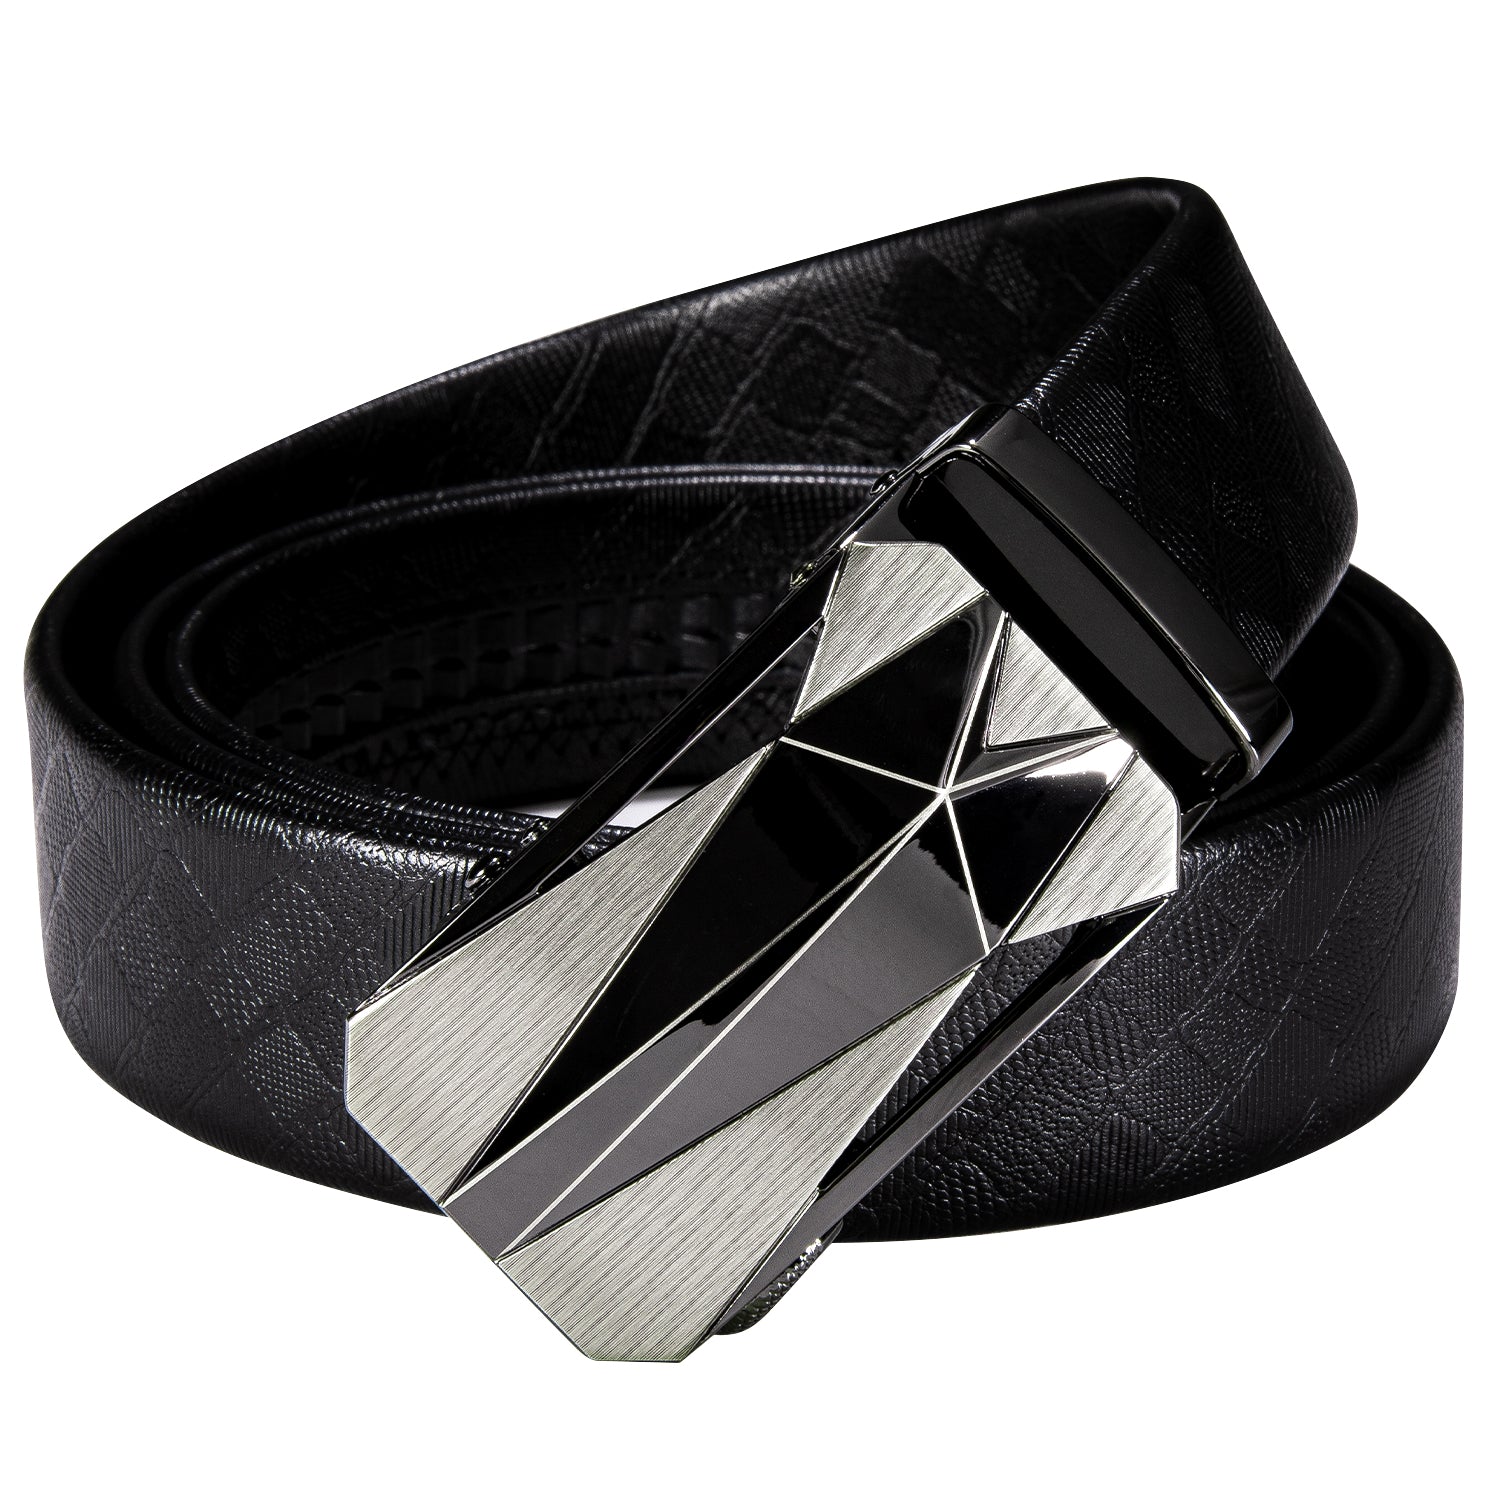 Novelty Black Geometric Metal Buckle Genuine Leather Belt 43 inch to 63 inch